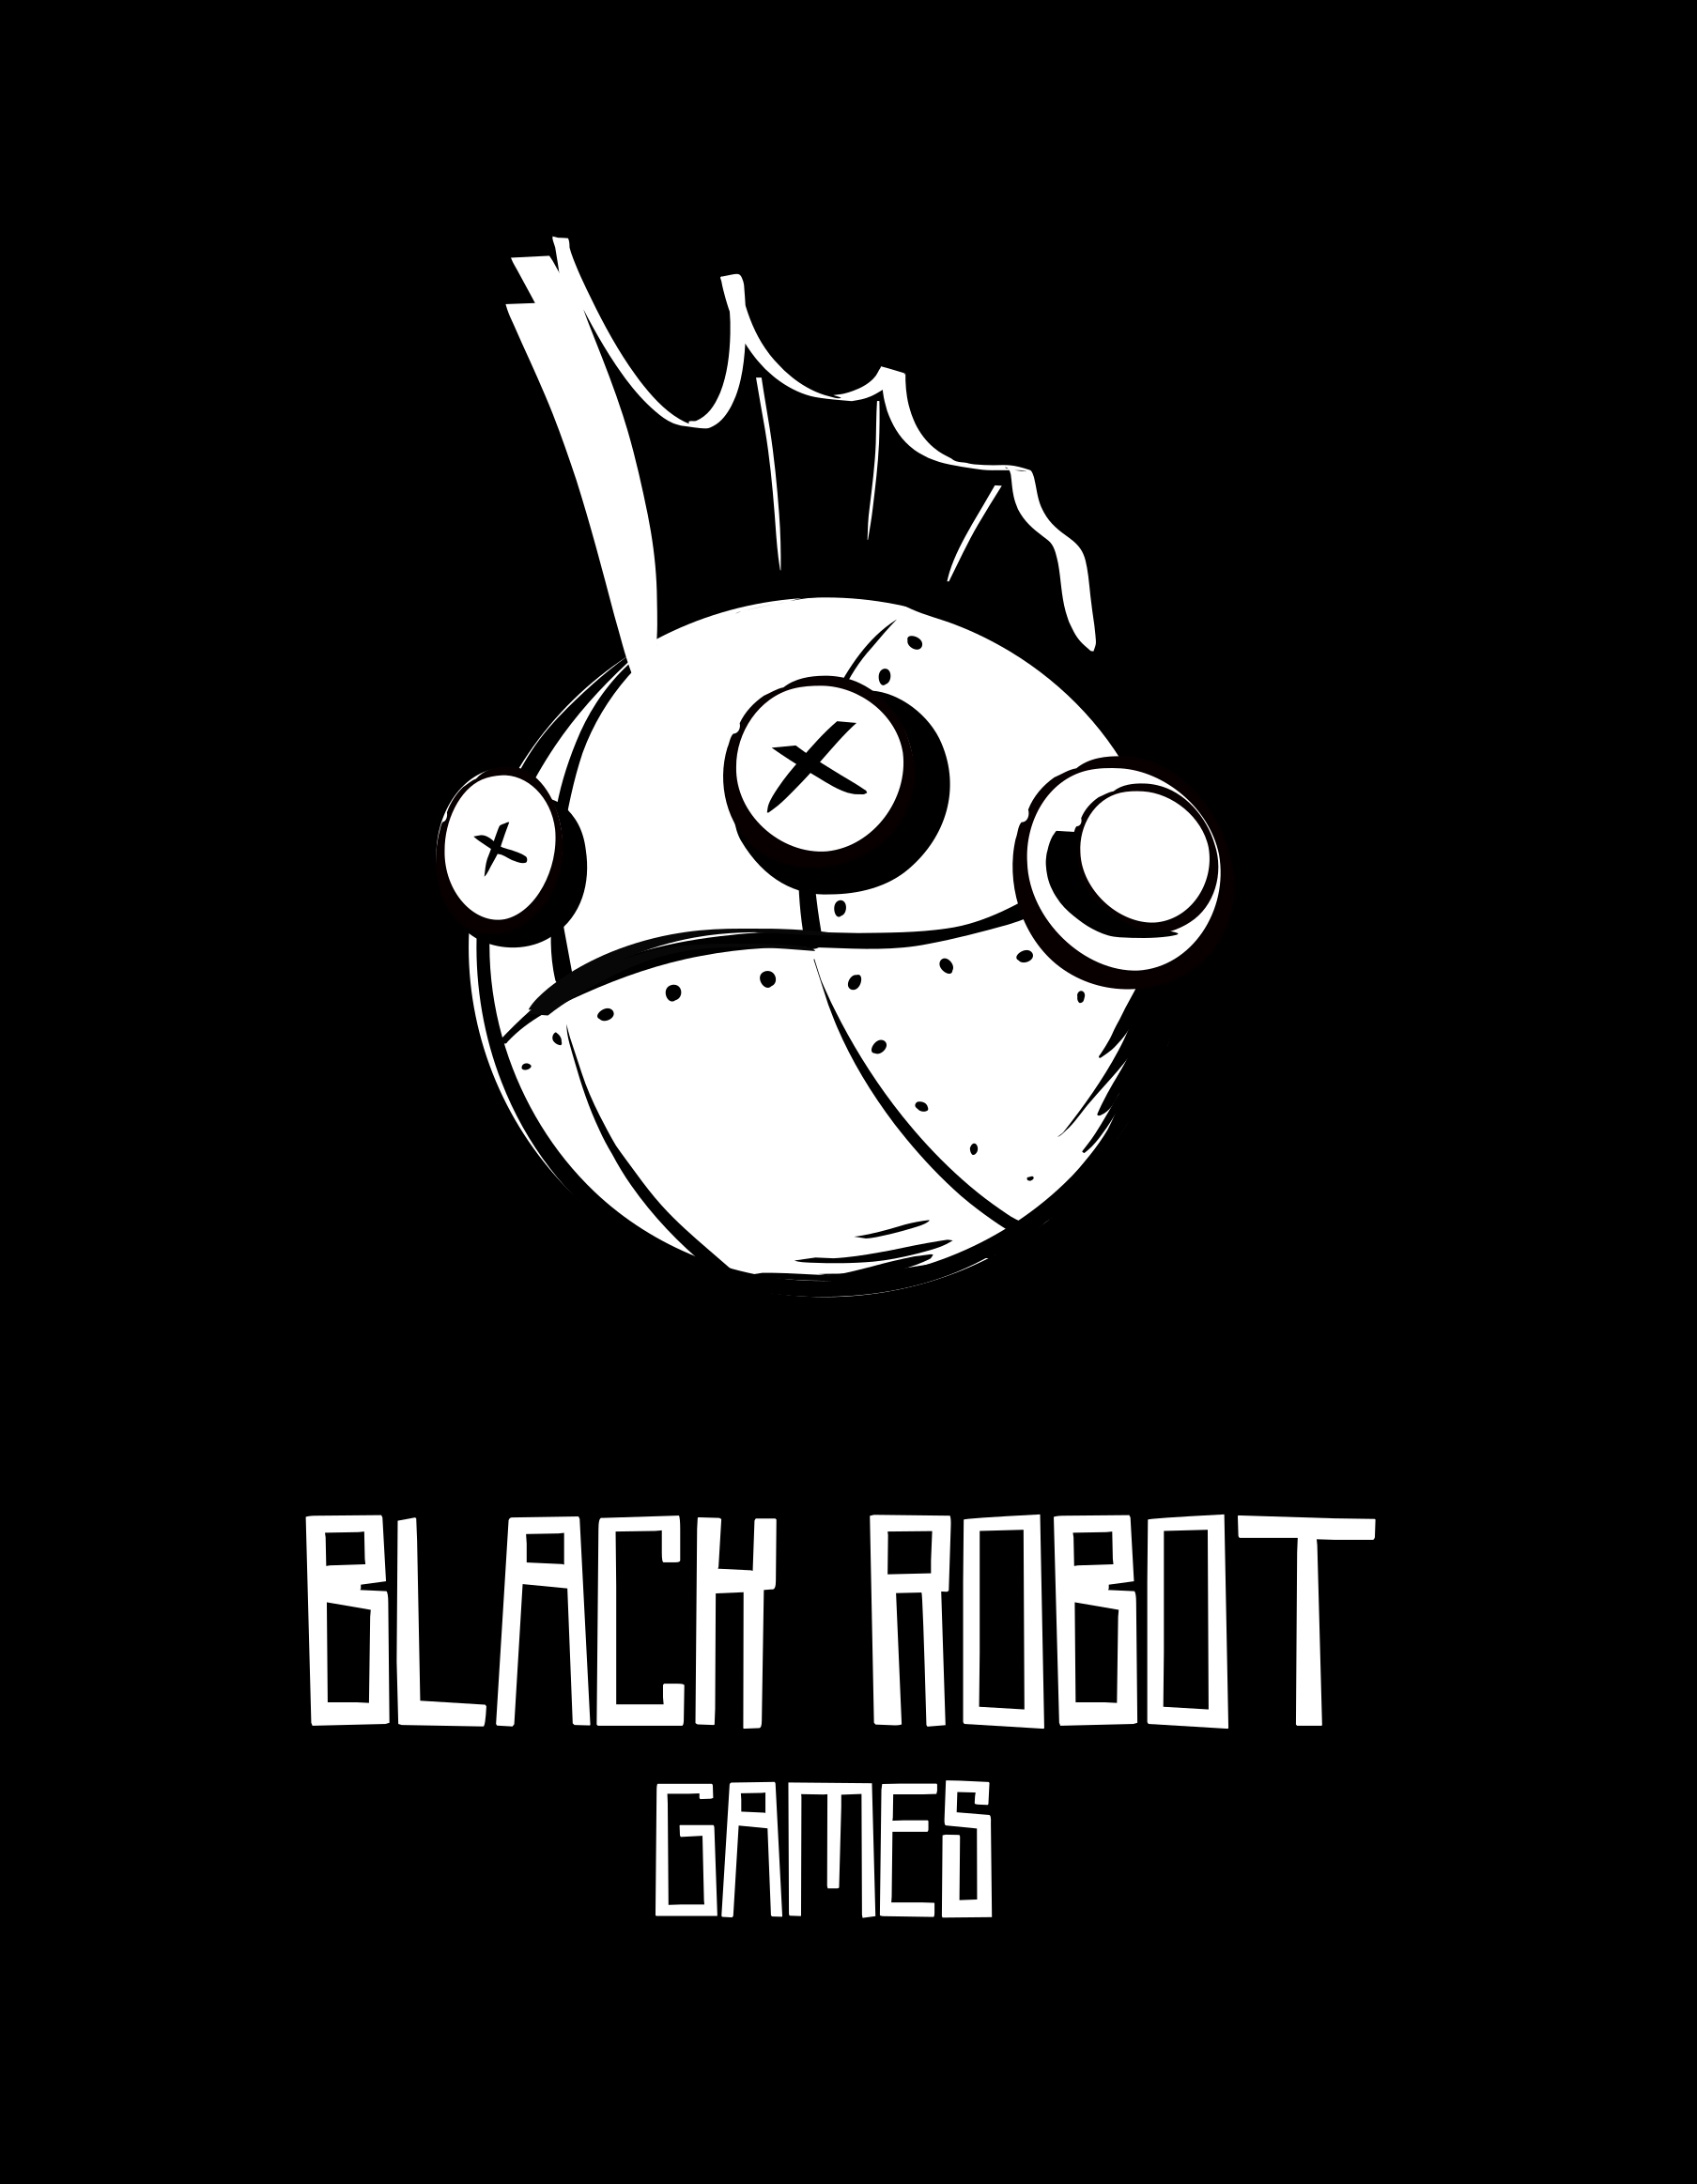 Black Robot Logo - Black Robot Games logo thoughts?